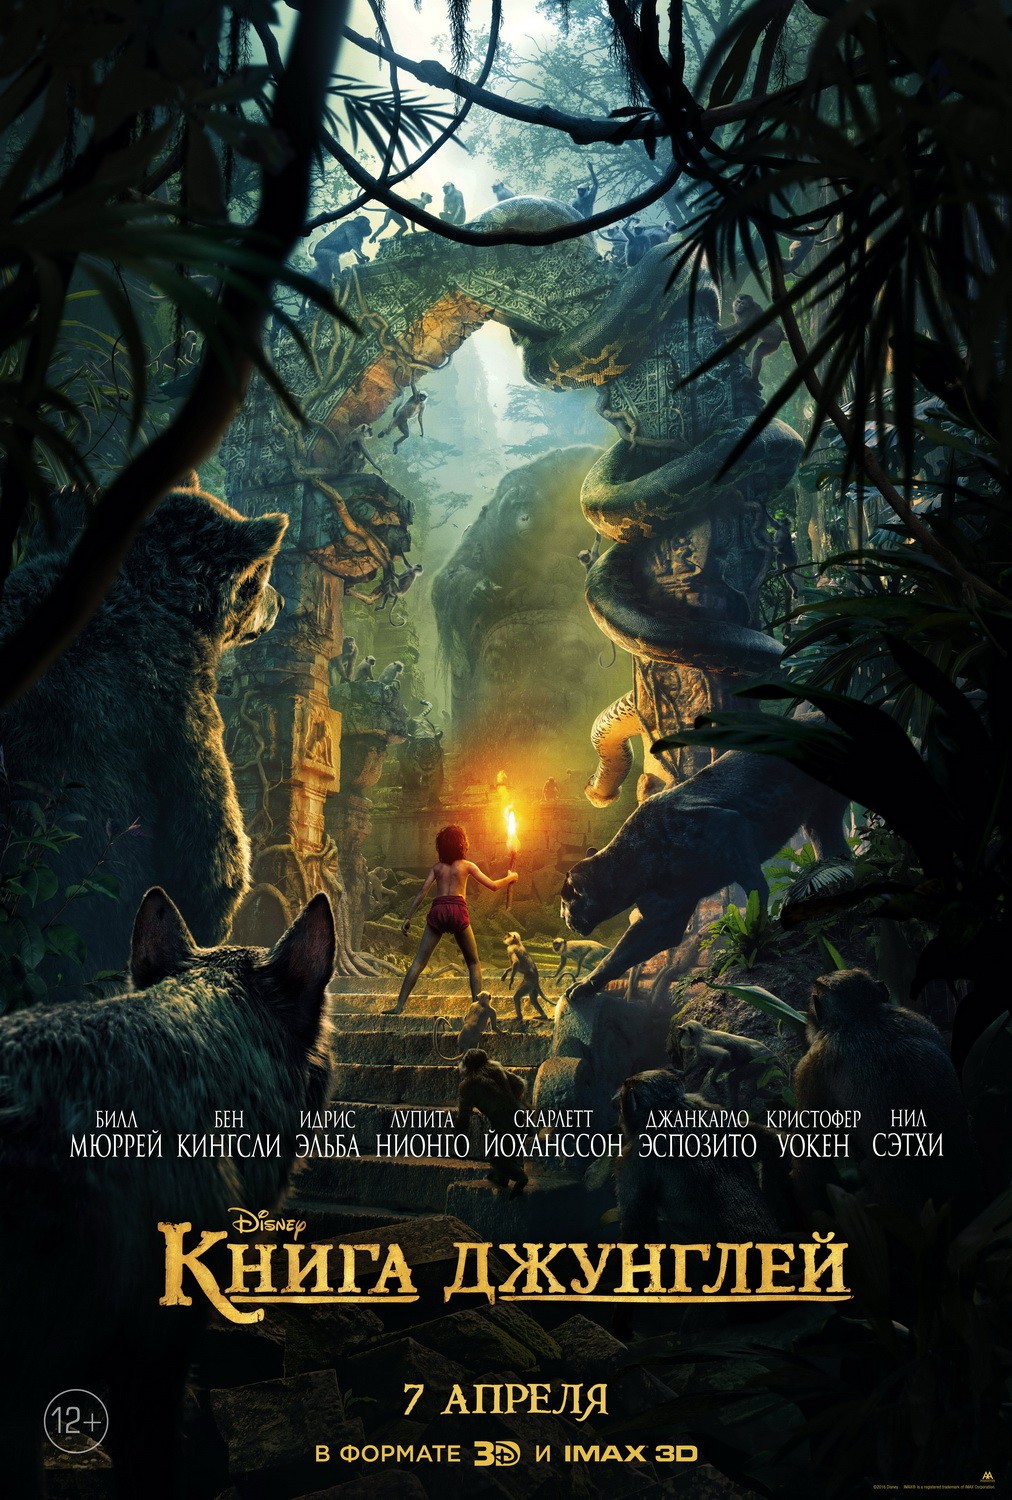 Книга джунглей: постер N119371